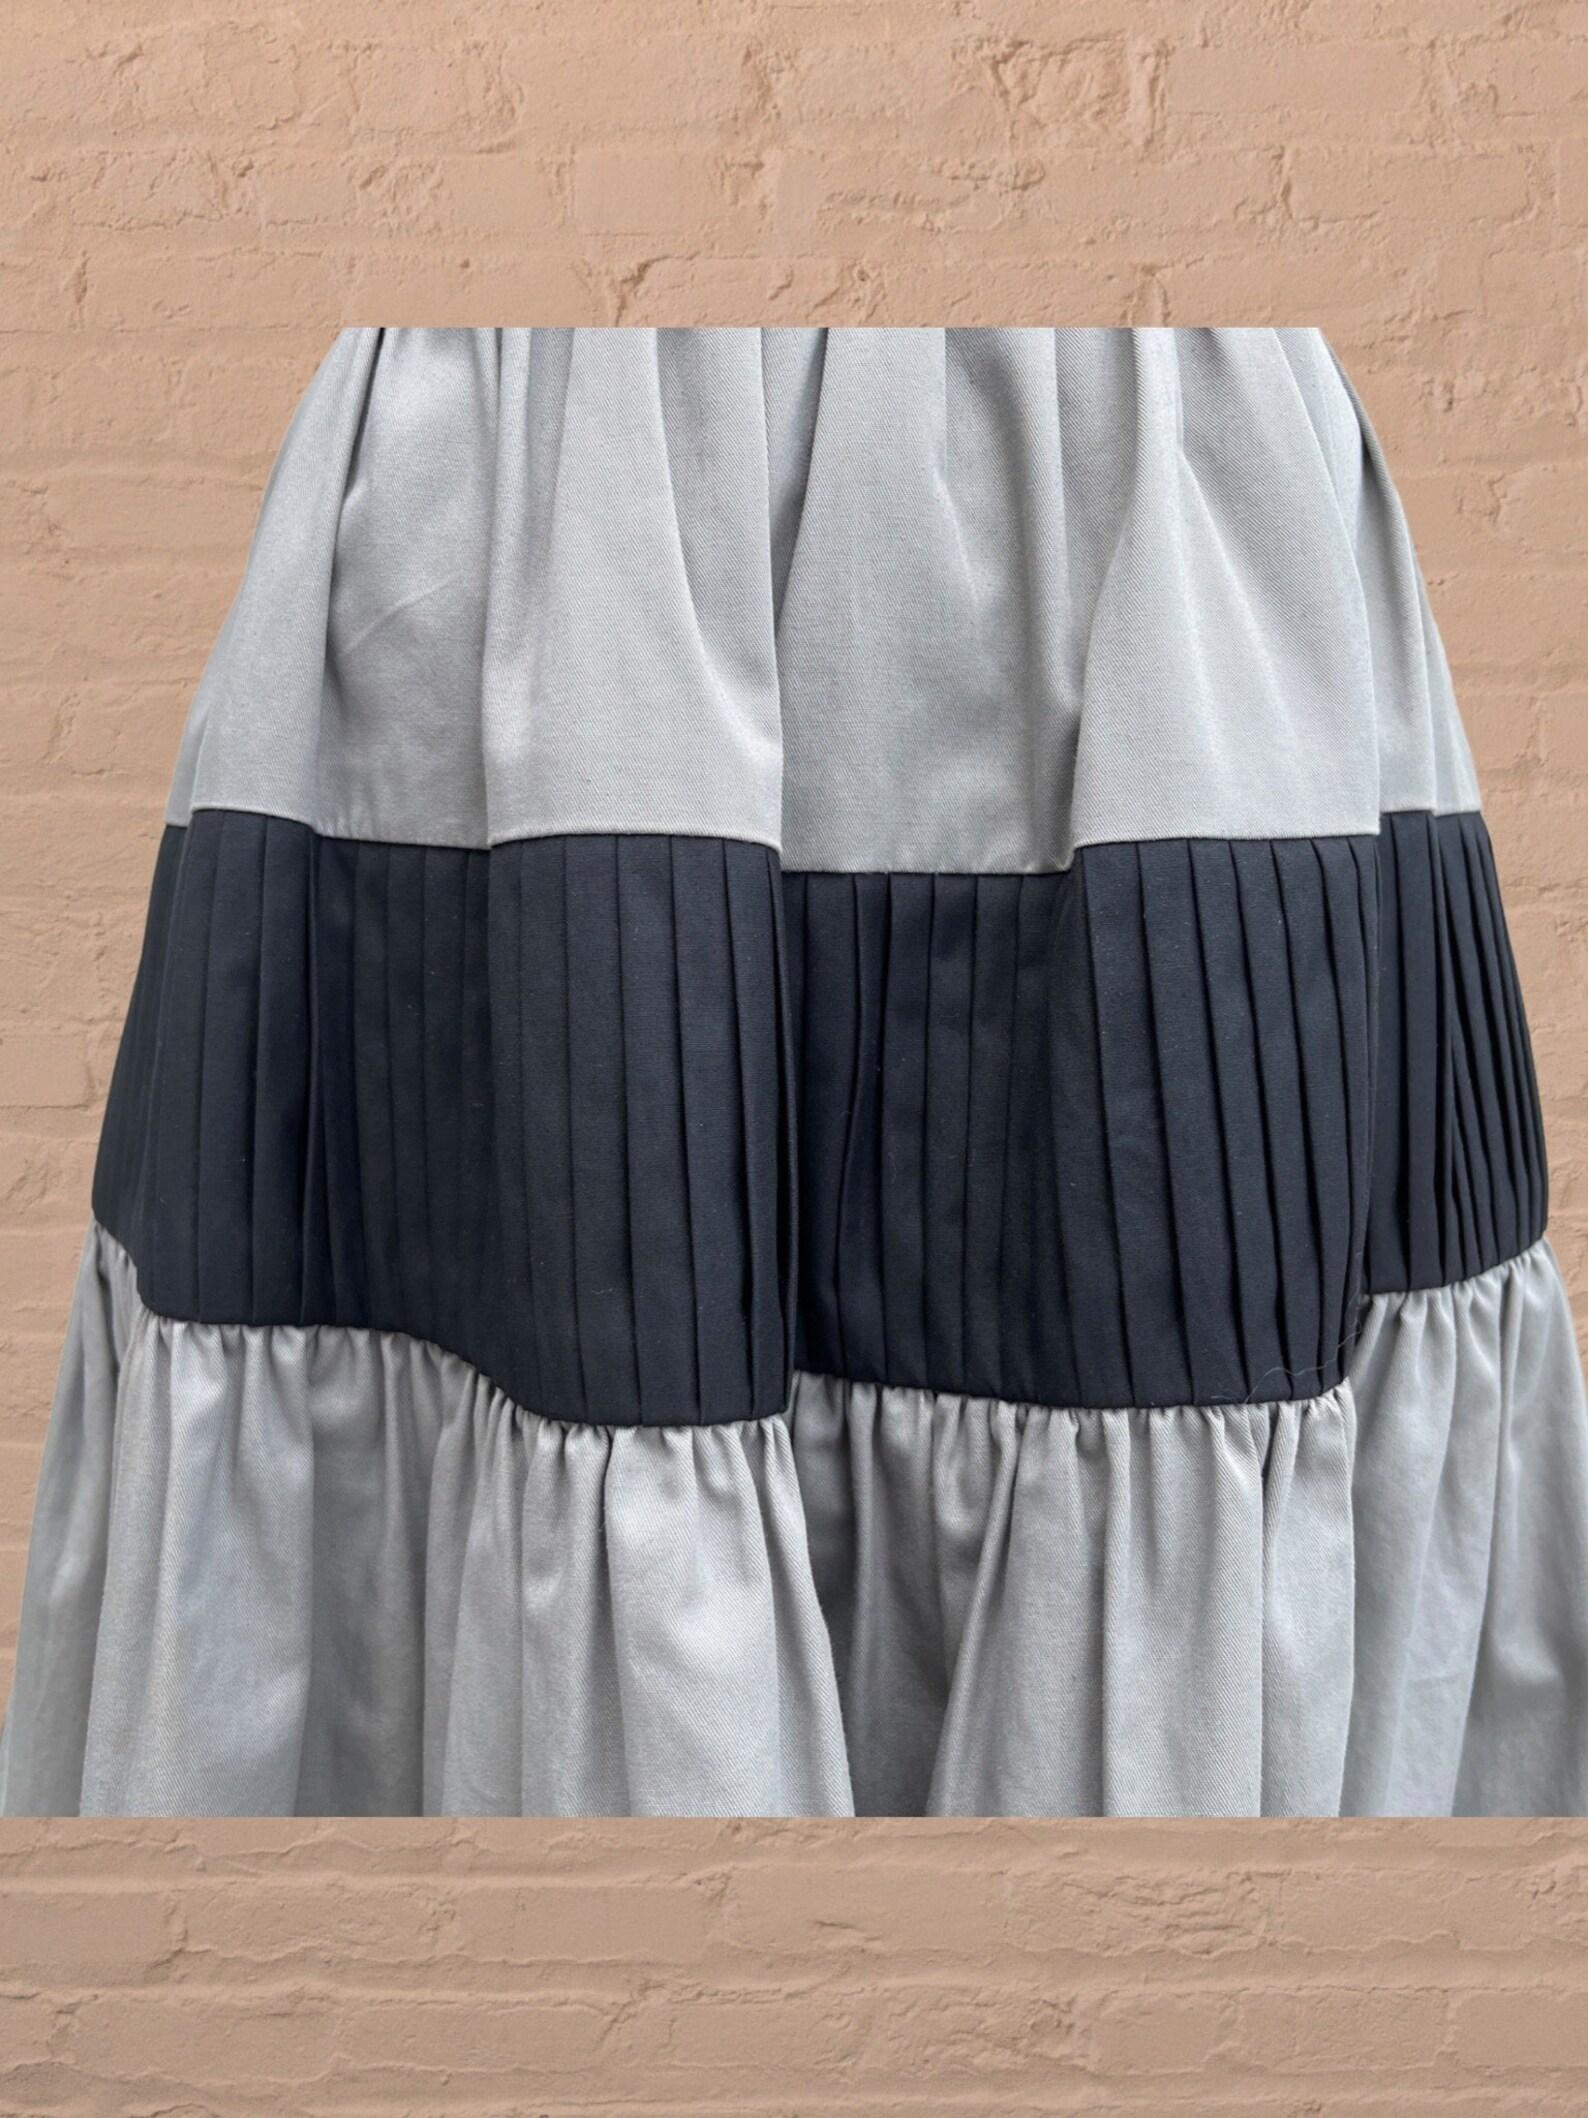 Yves Saint Laurent Colorblock Skirt, Circa 1980s For Sale 5